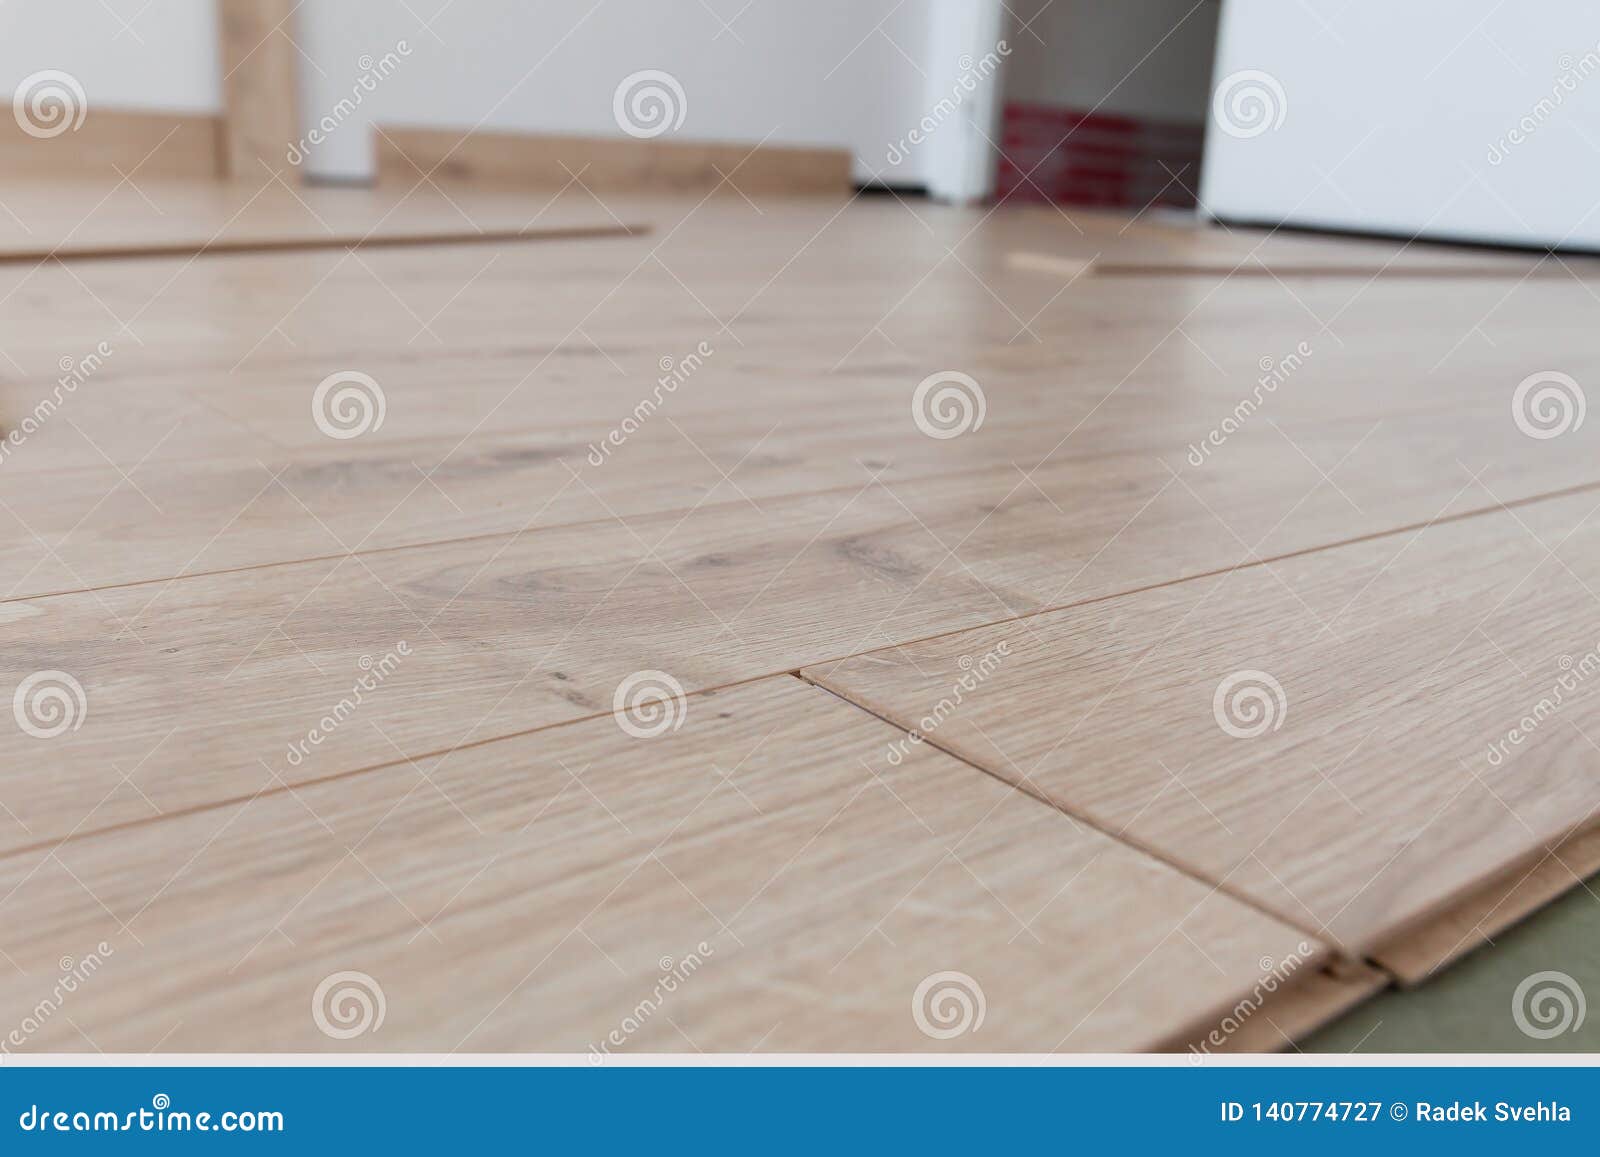 Reconstruction Of Wooden Floor Stock Image Image Of Hammer